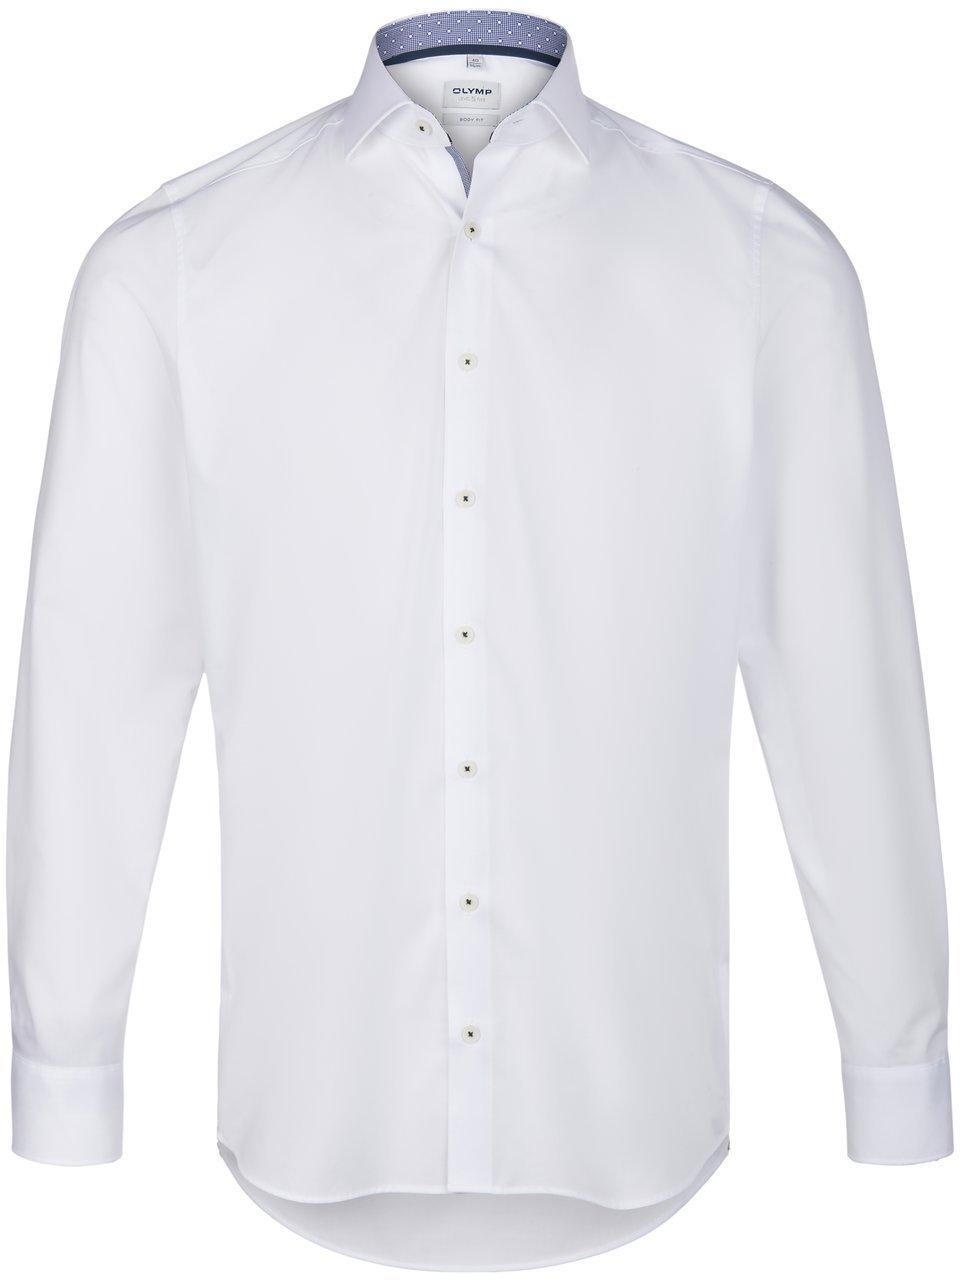 Overhemd lange mouwen Van OLYMP Level 5 Five wit